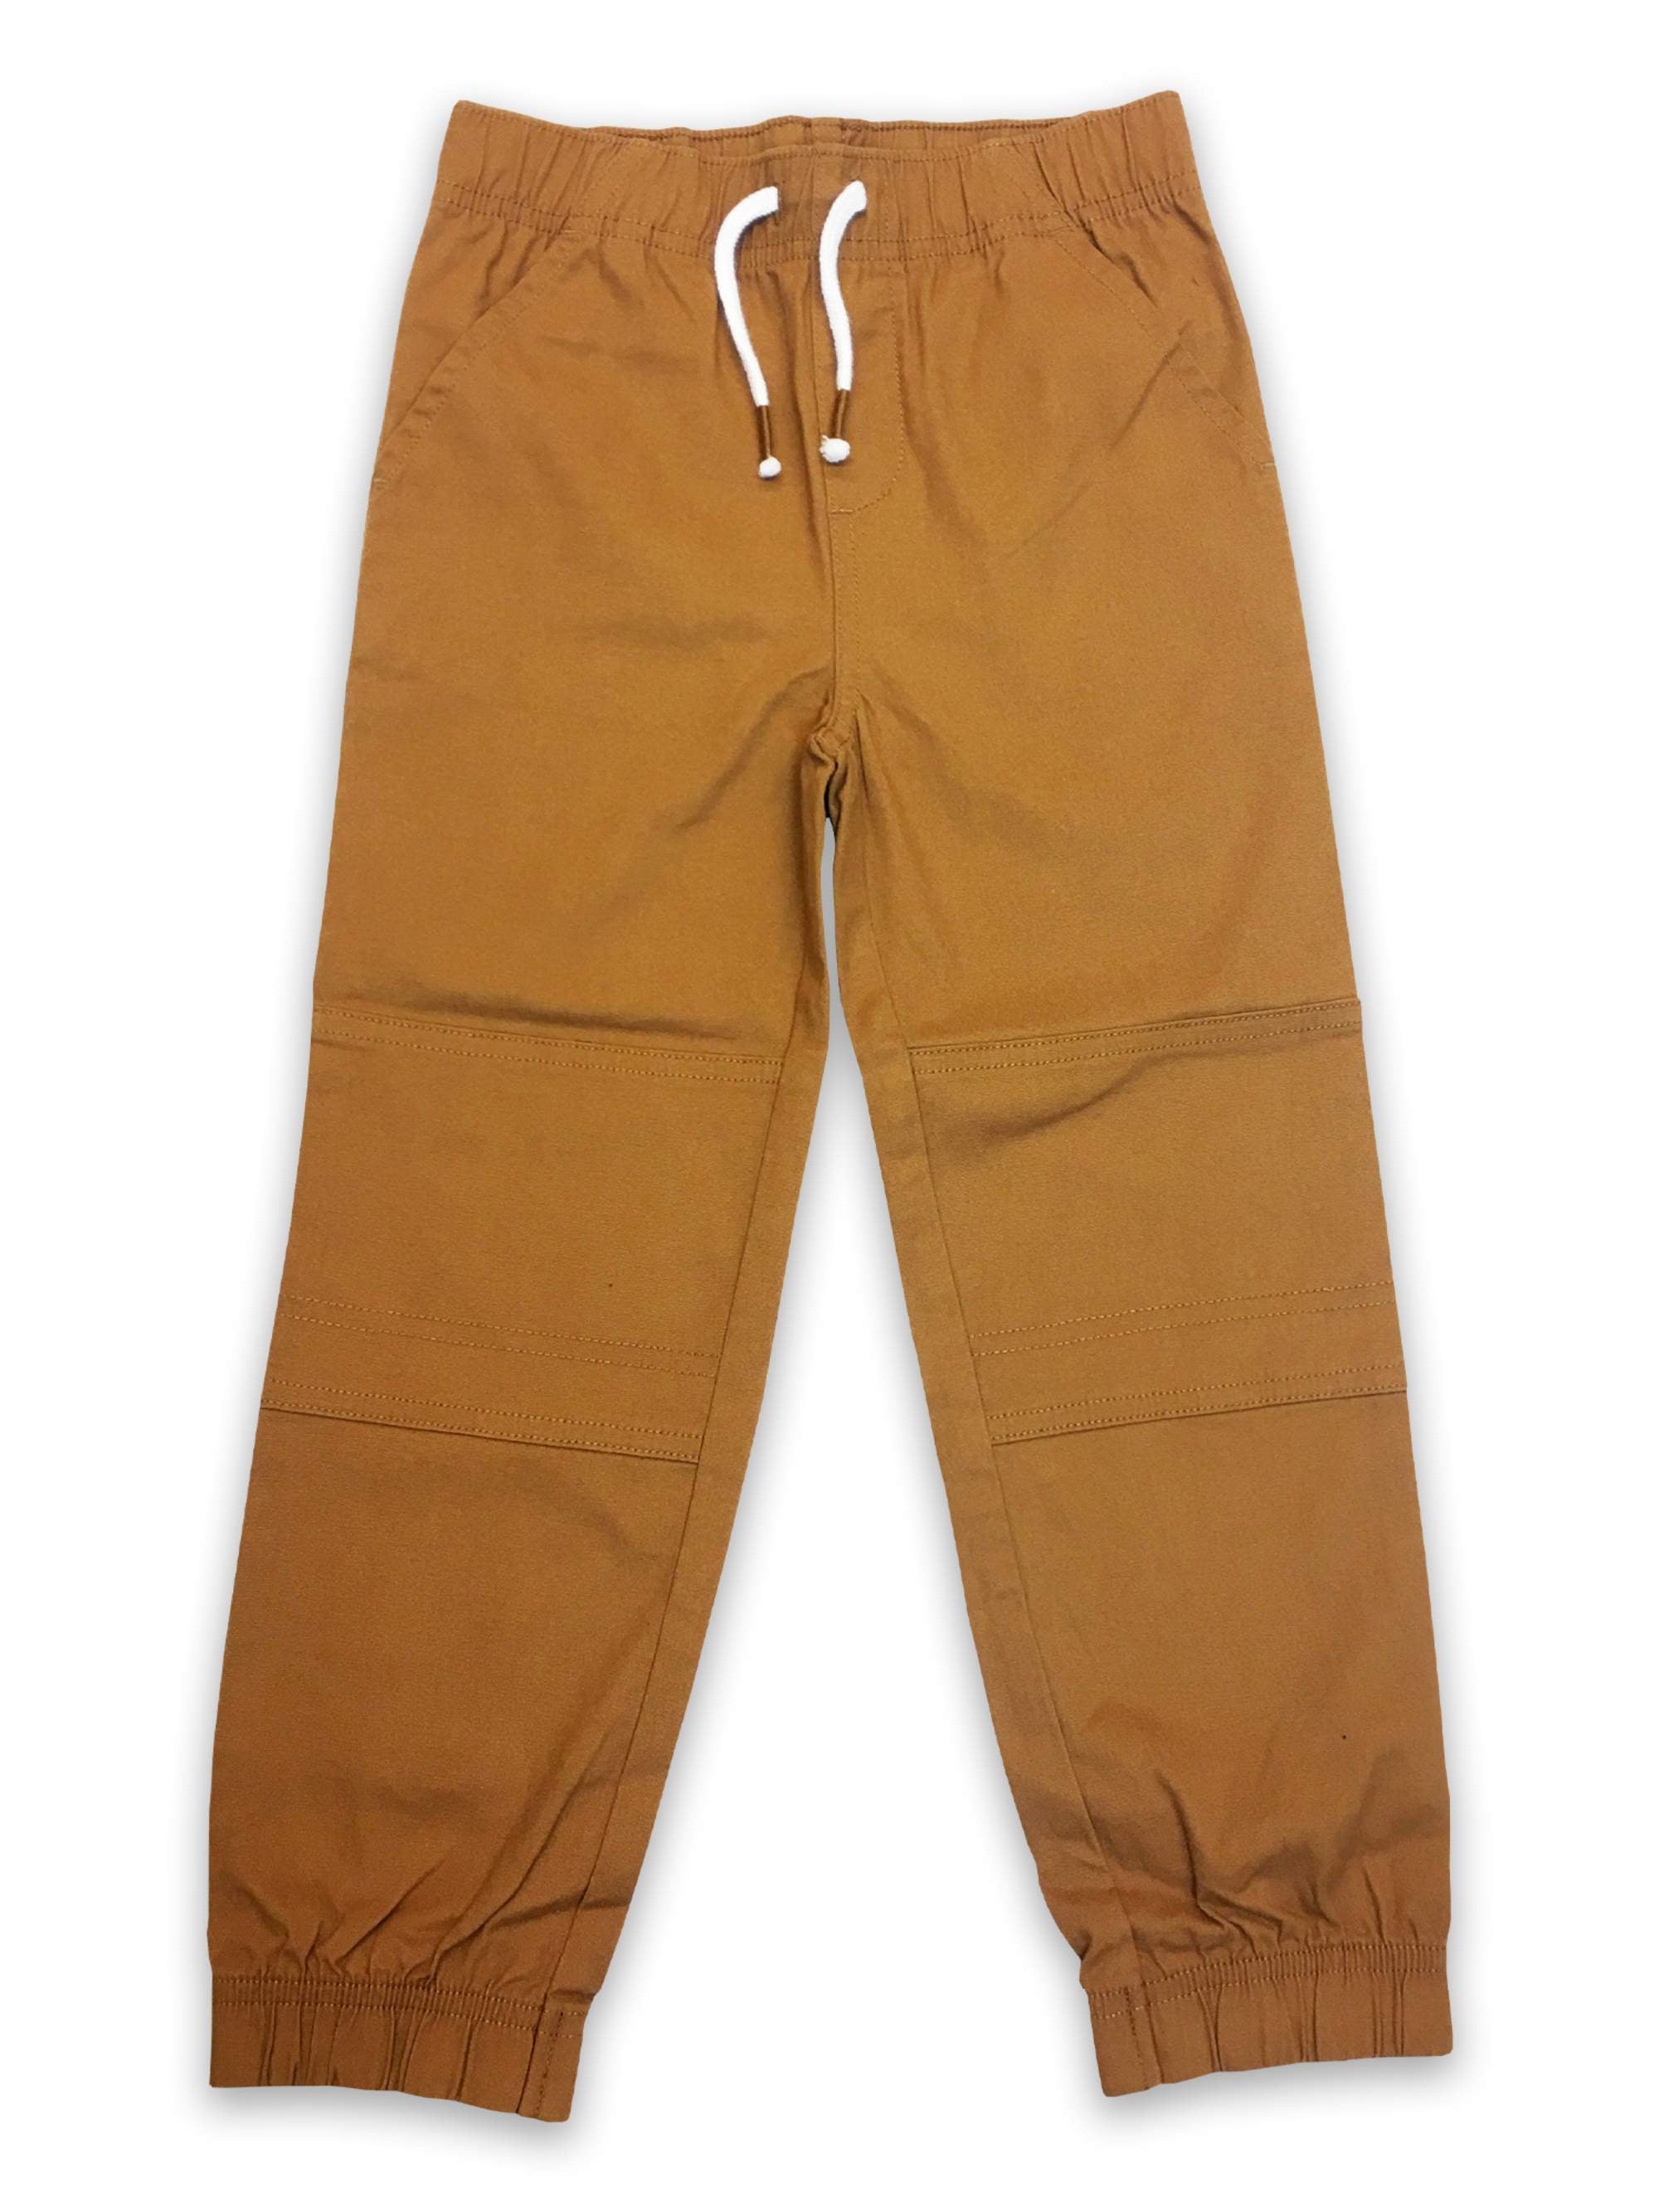 Garan Boy's Woven Solid Pant - Walmart.com